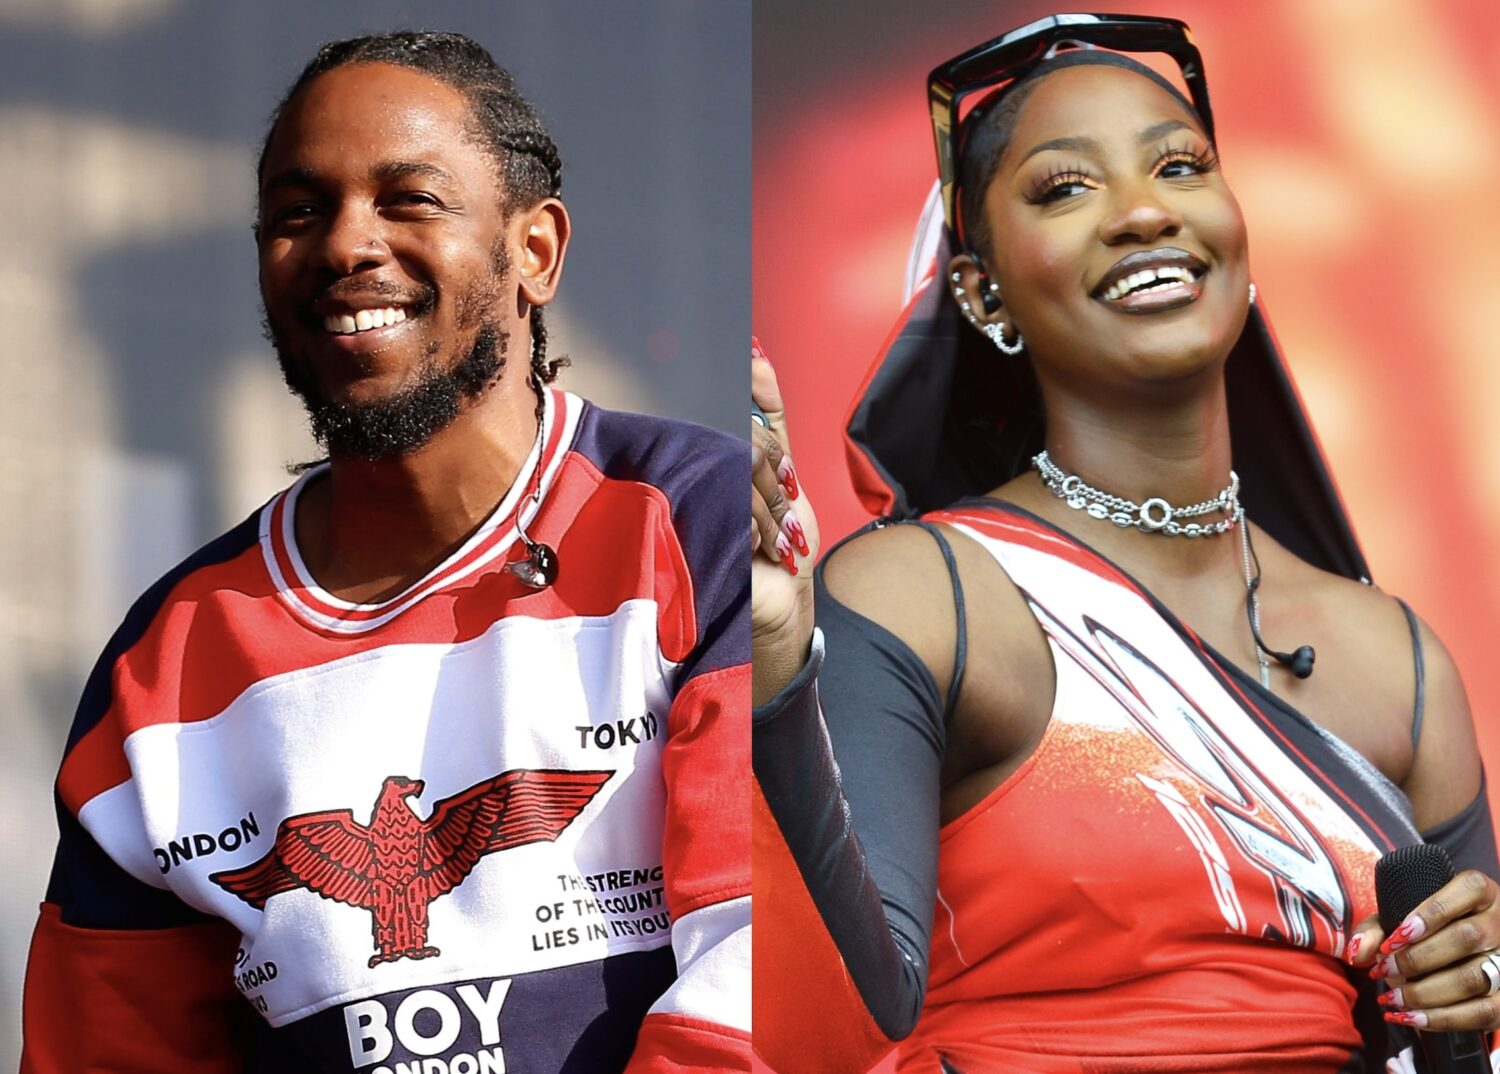 Kendrick Lamar Shares Wisdom on ''Conscious Artists' That He Heard